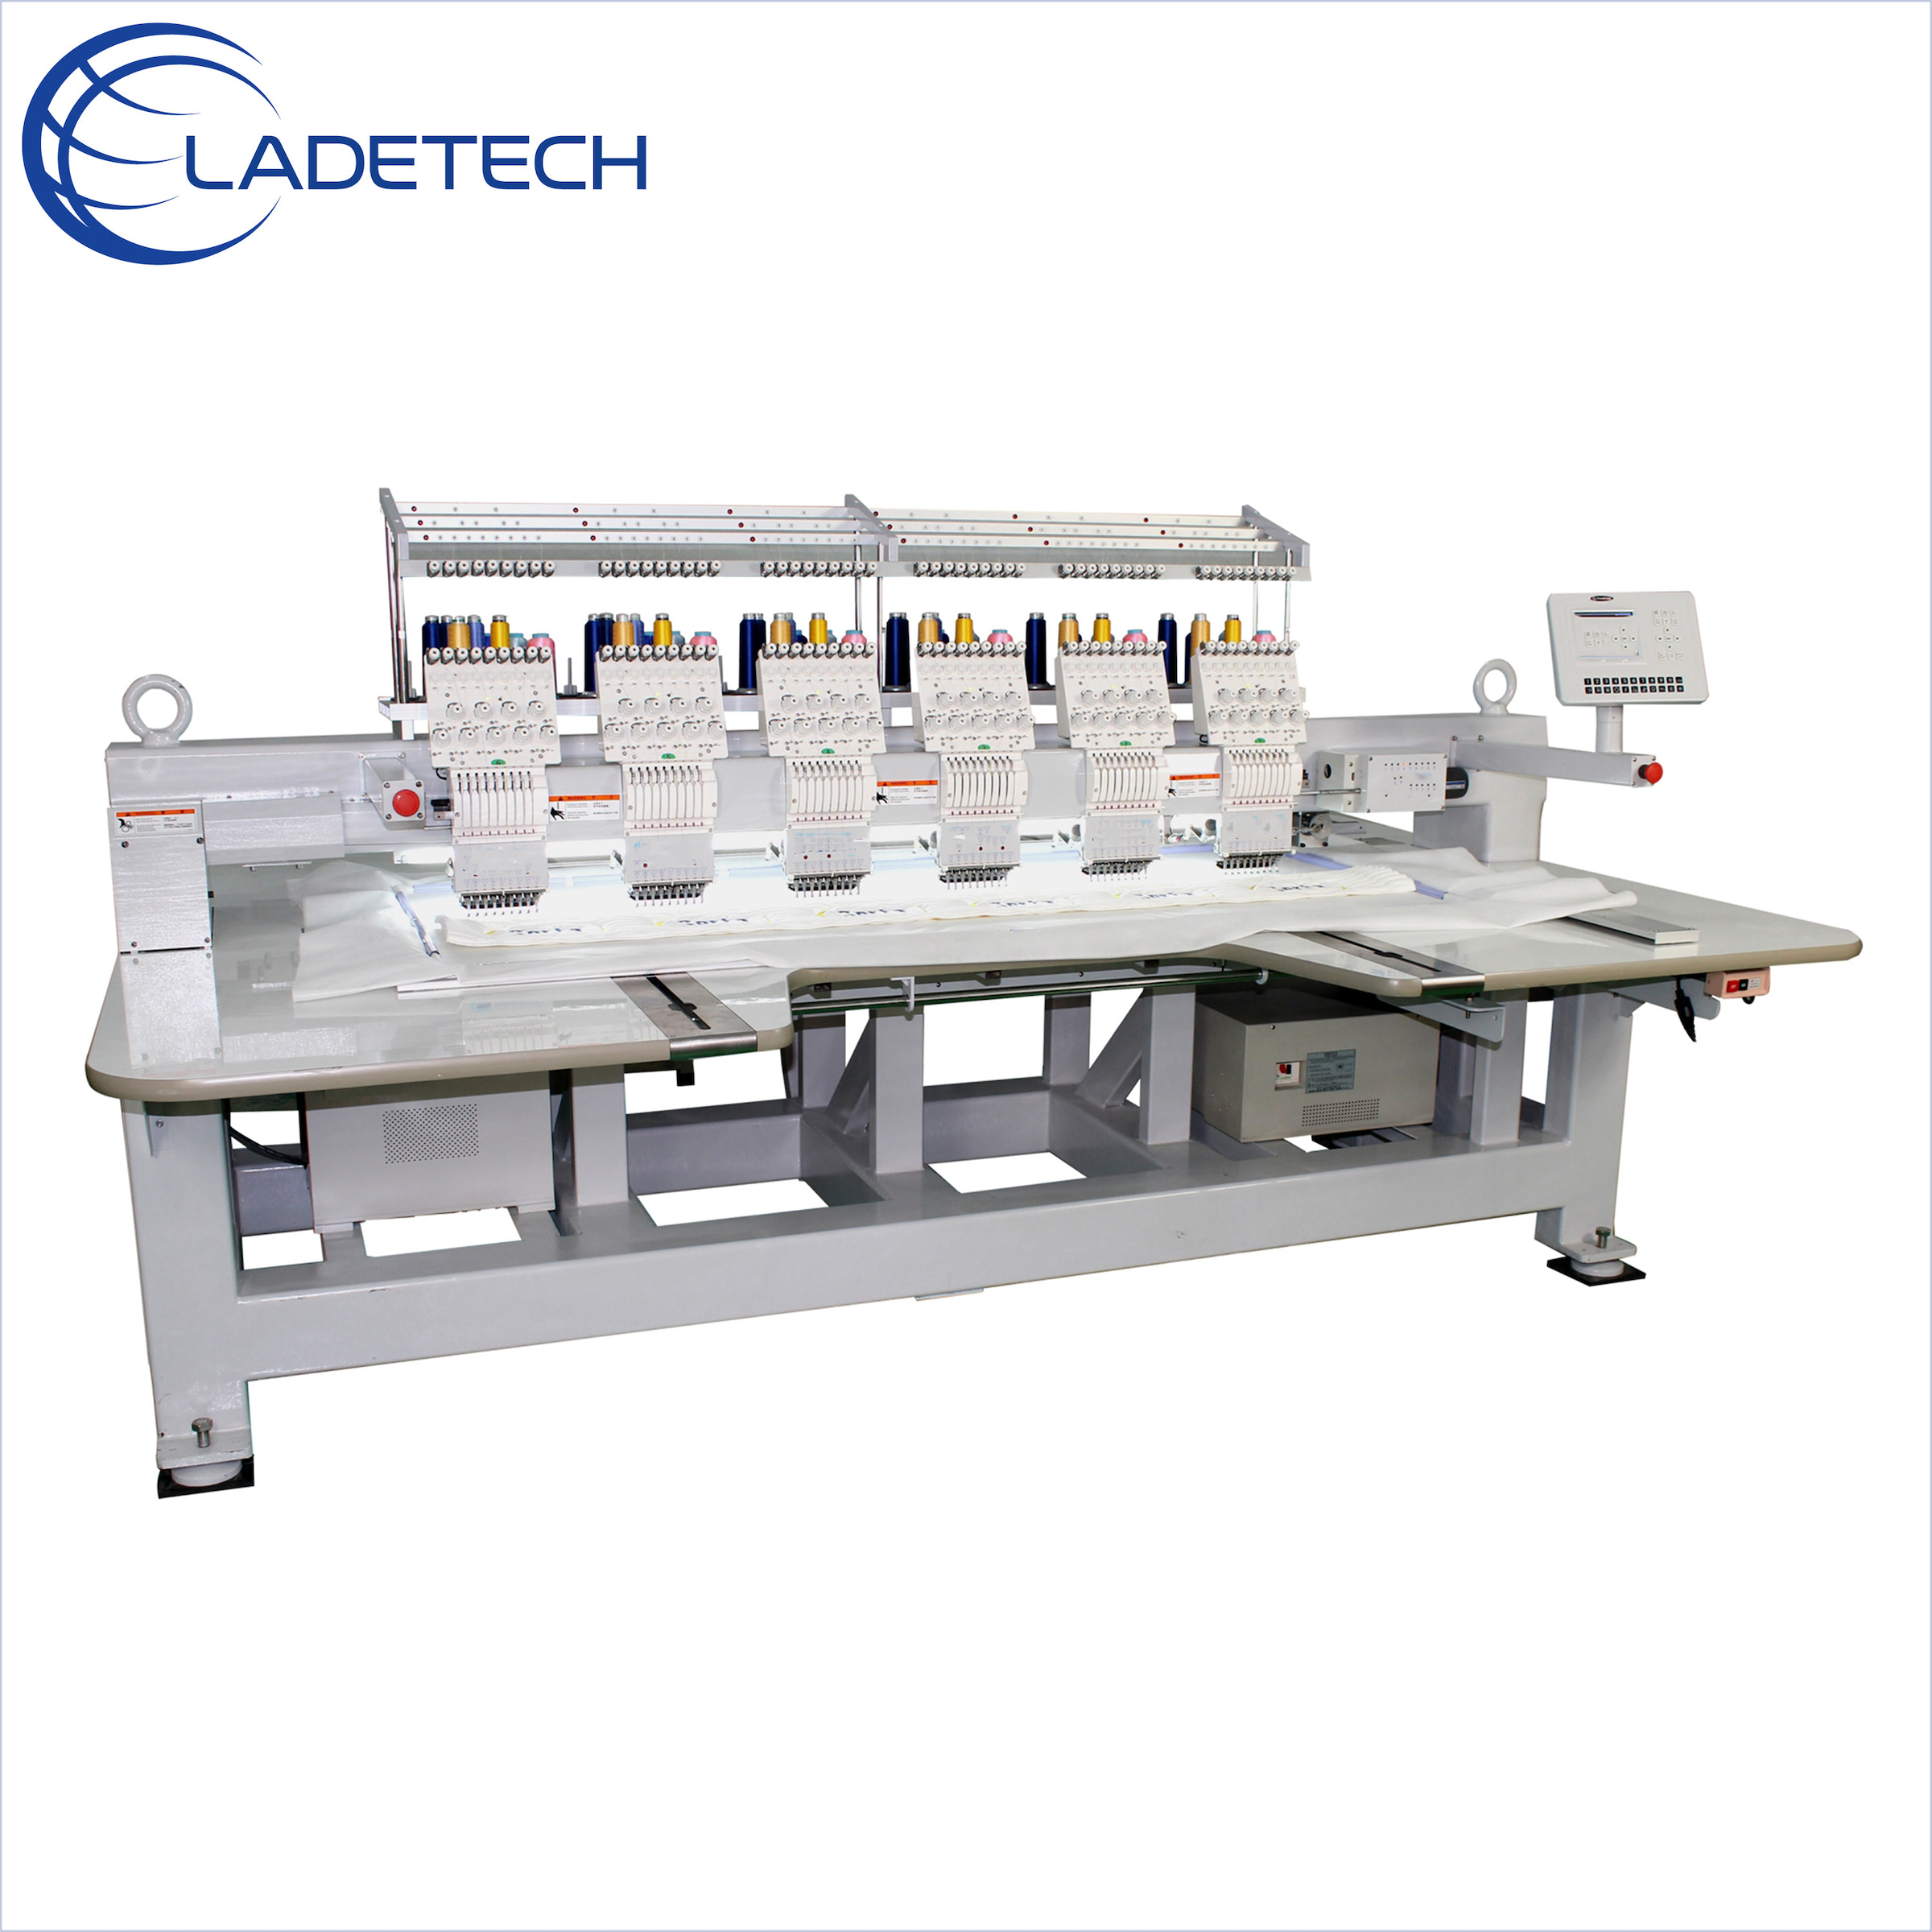 LDT-EBM06 Mattress Label Embroidery Machine - Ladetech Mattress Machine